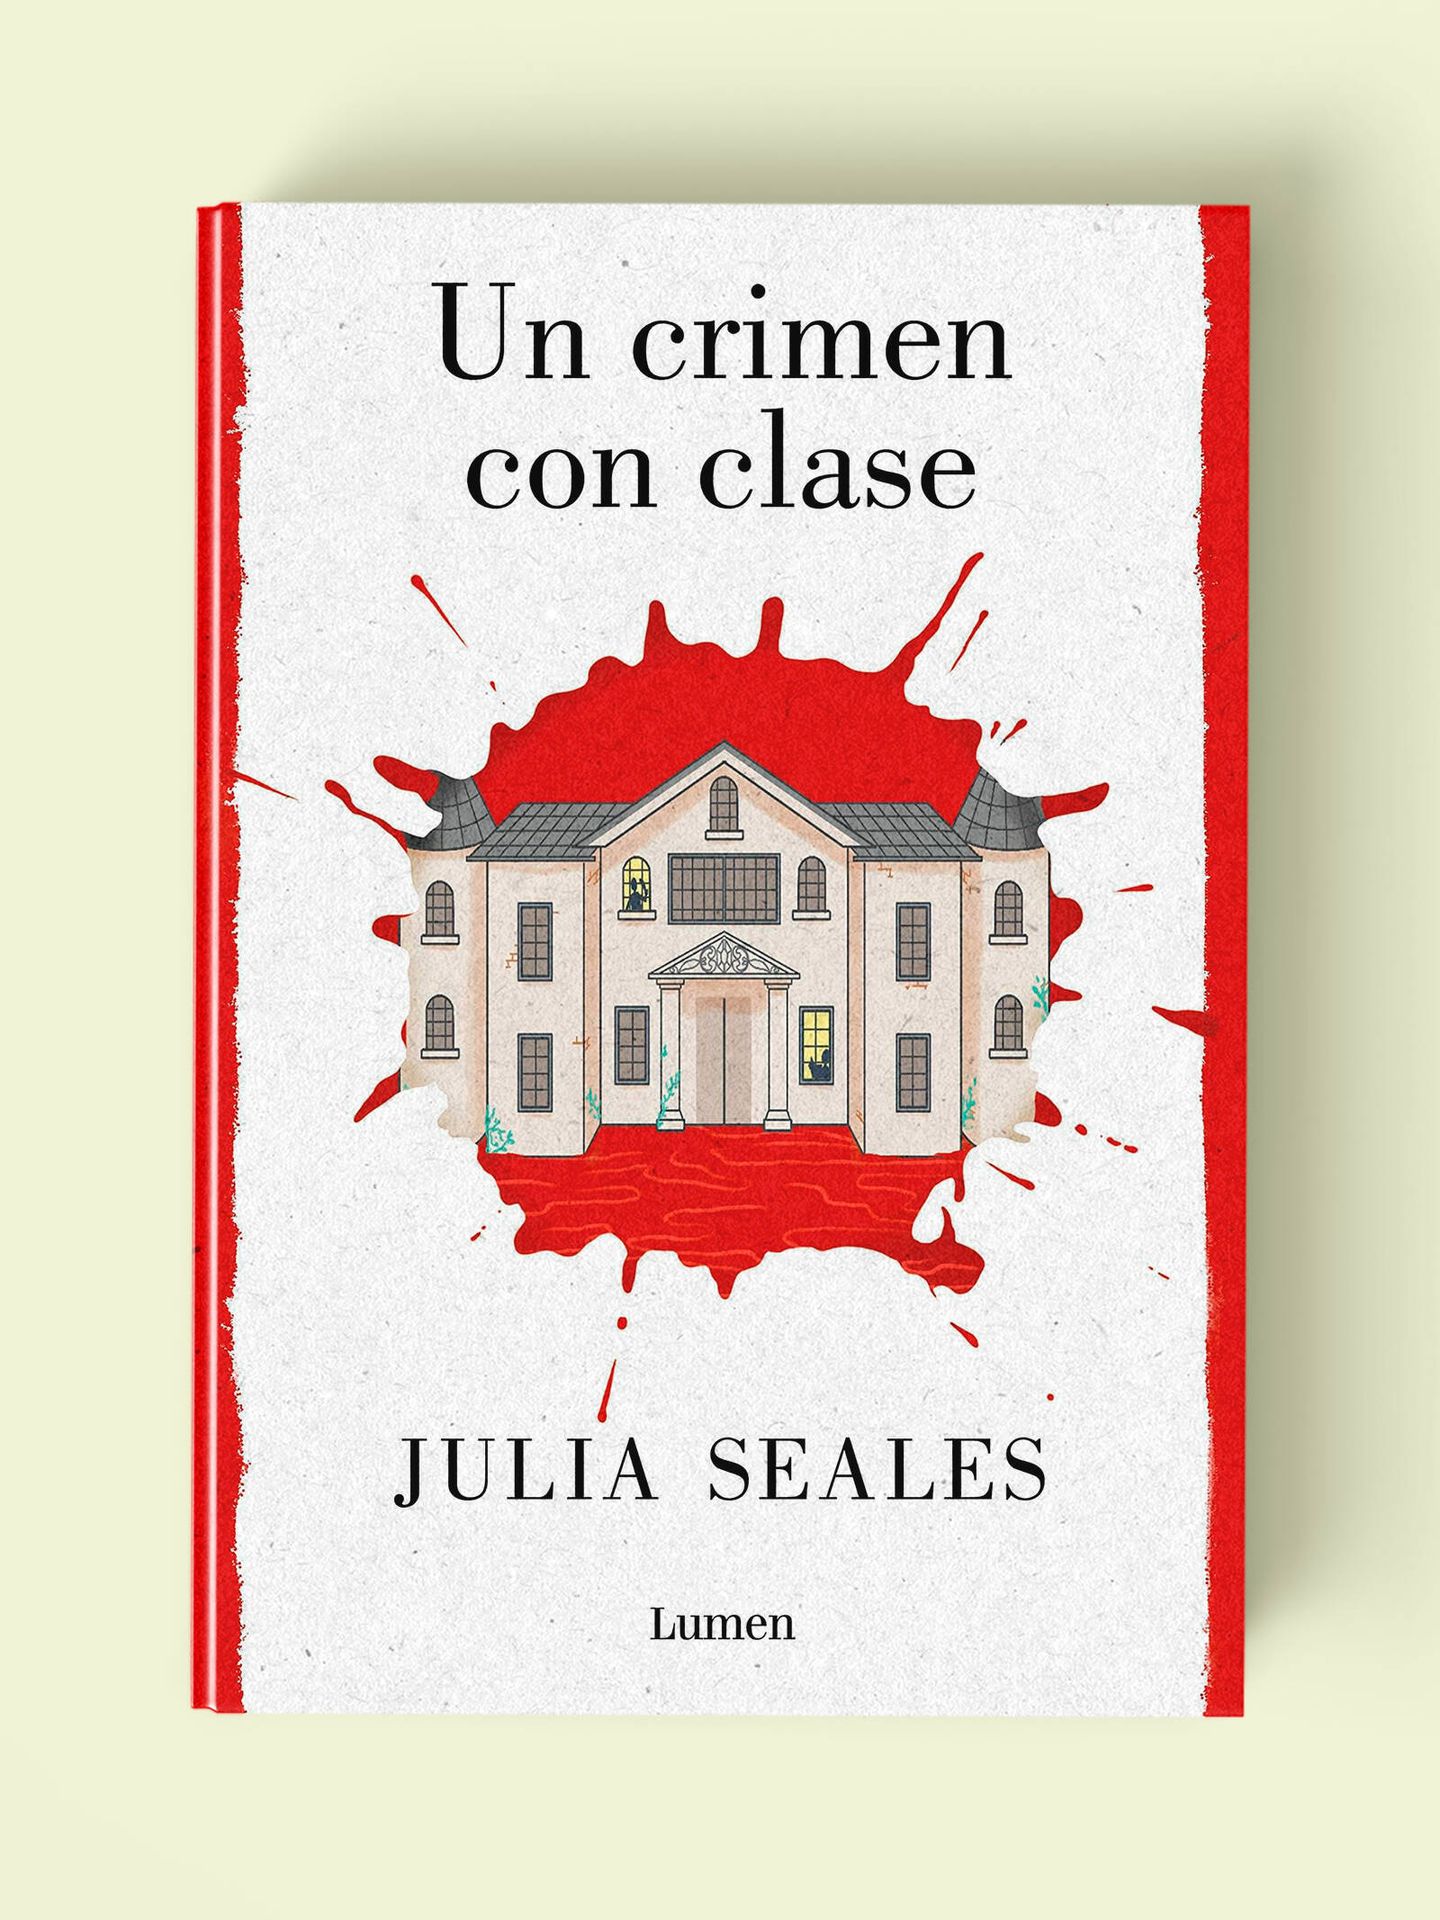 Portada de 'Un crimen con clase', de Julia Seales.